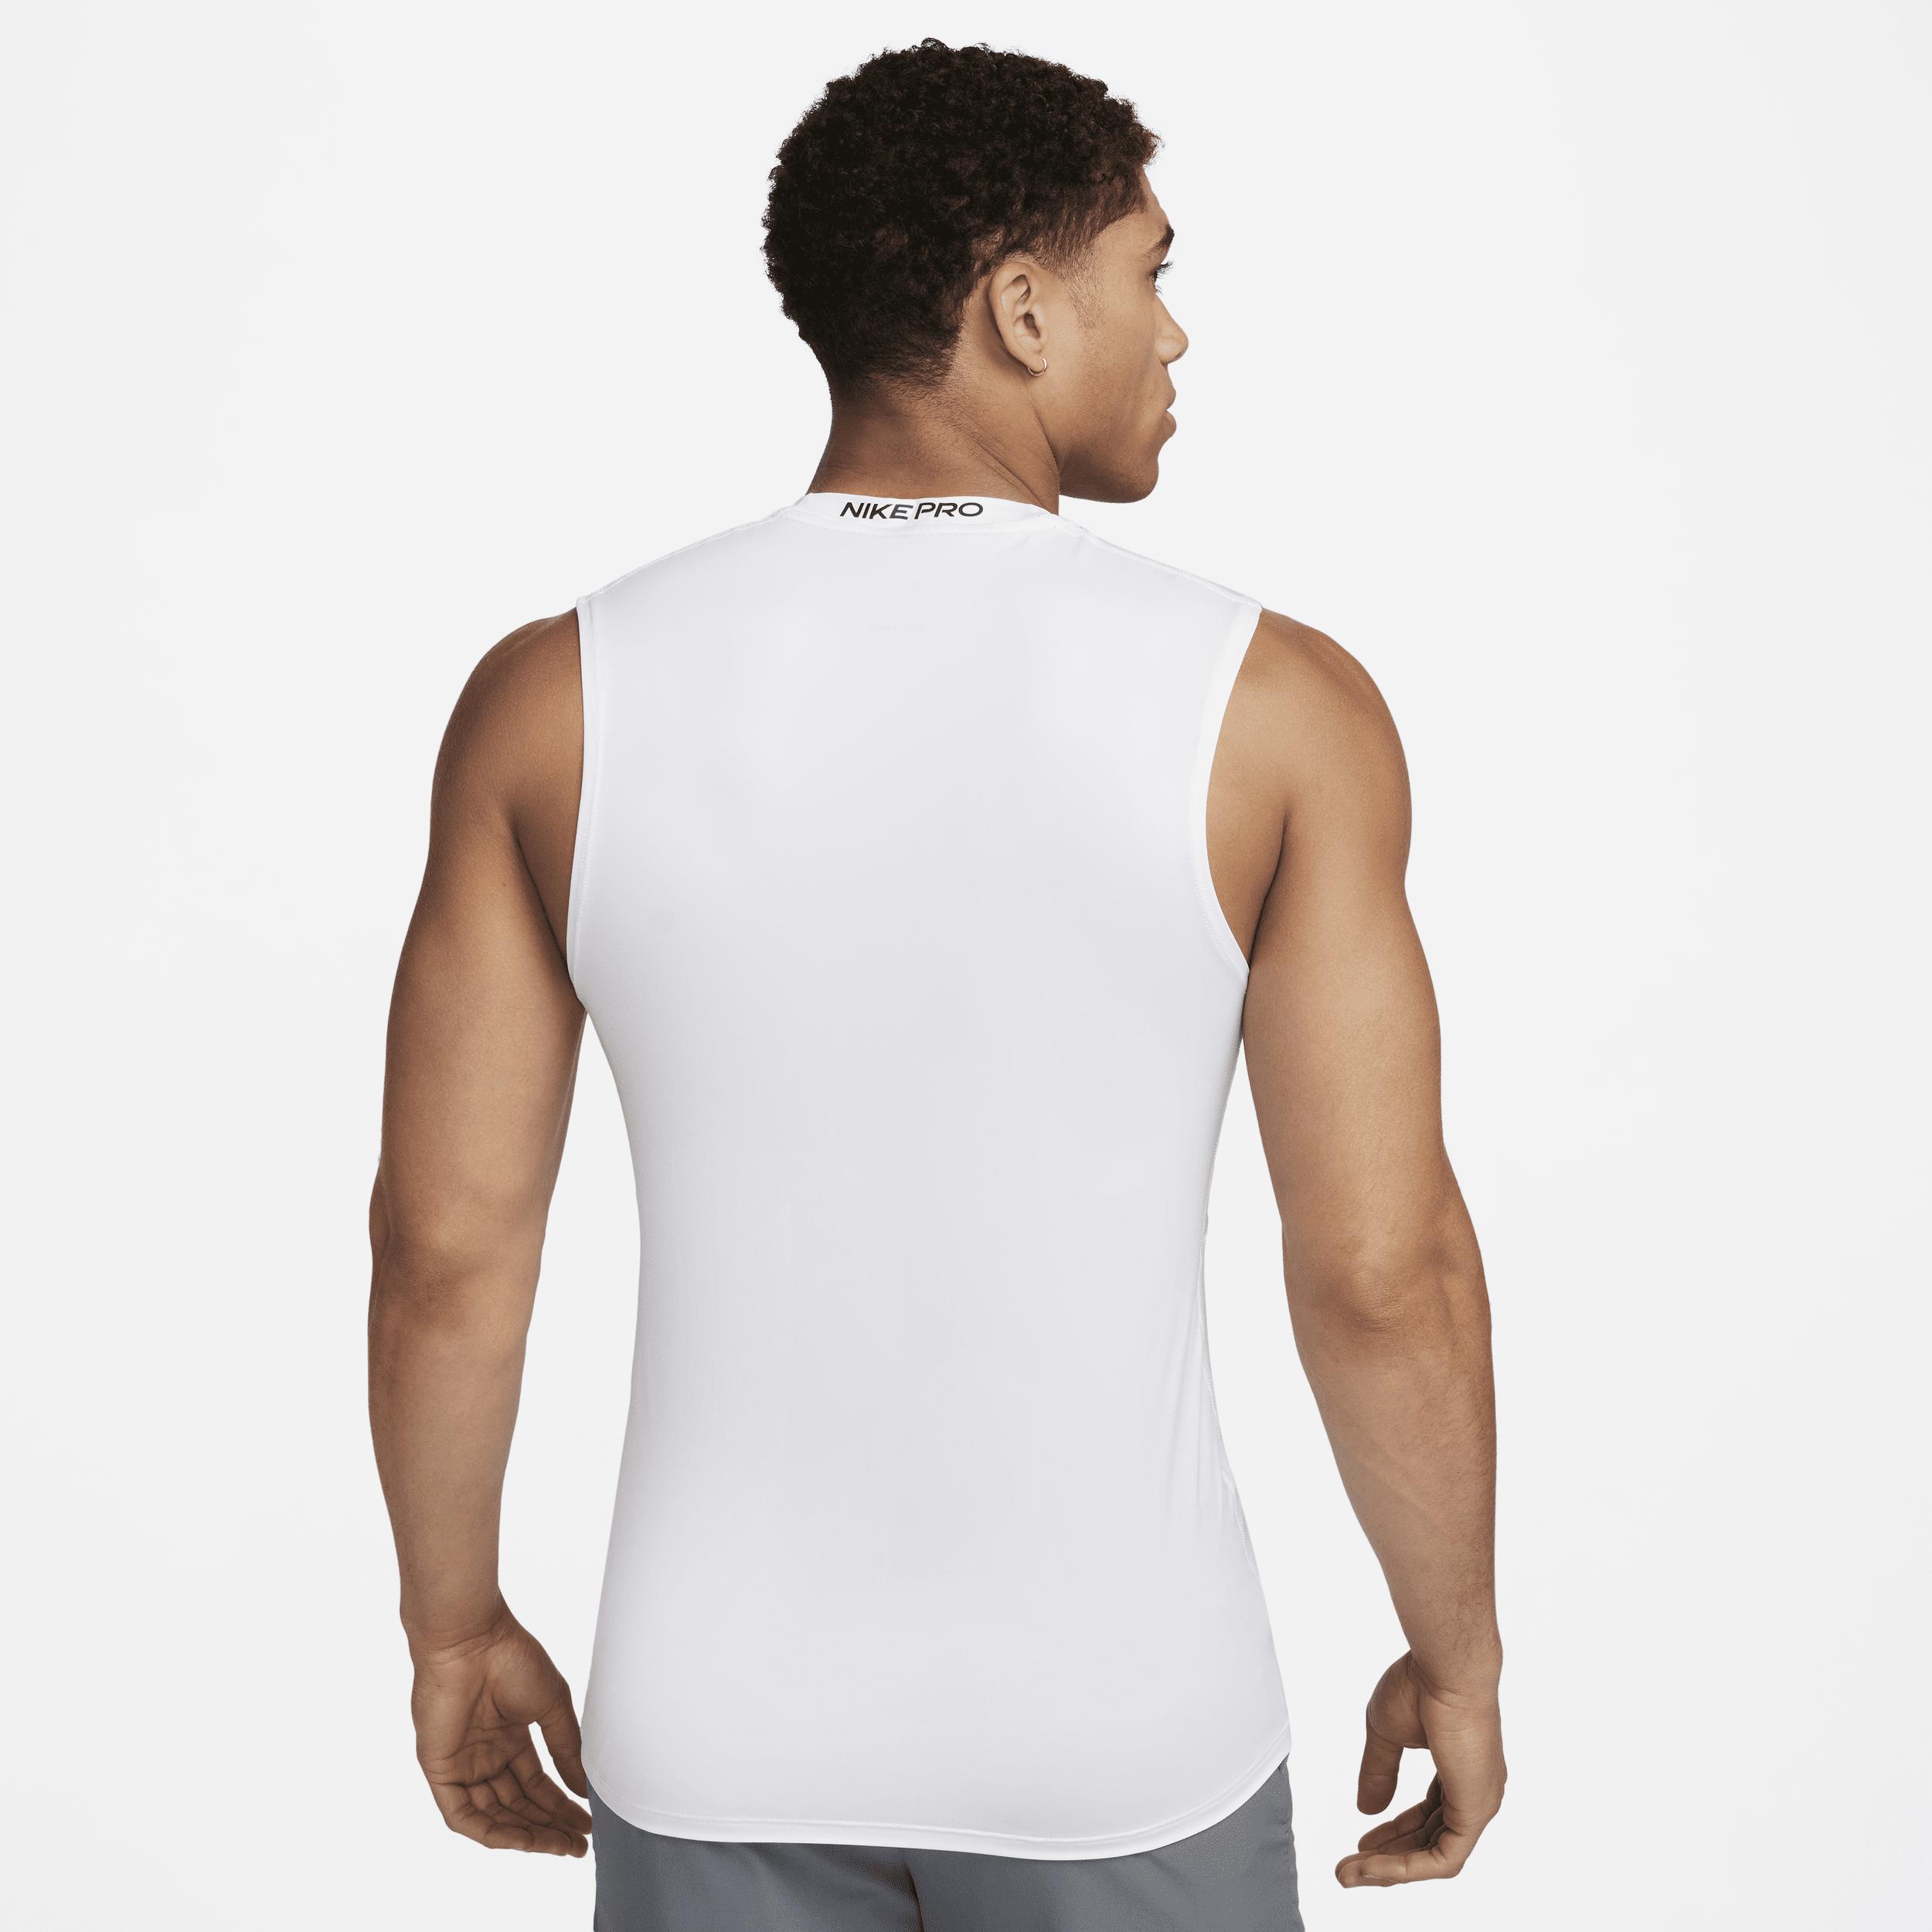 Nike Pro Compression Sleeveless Shirt - White